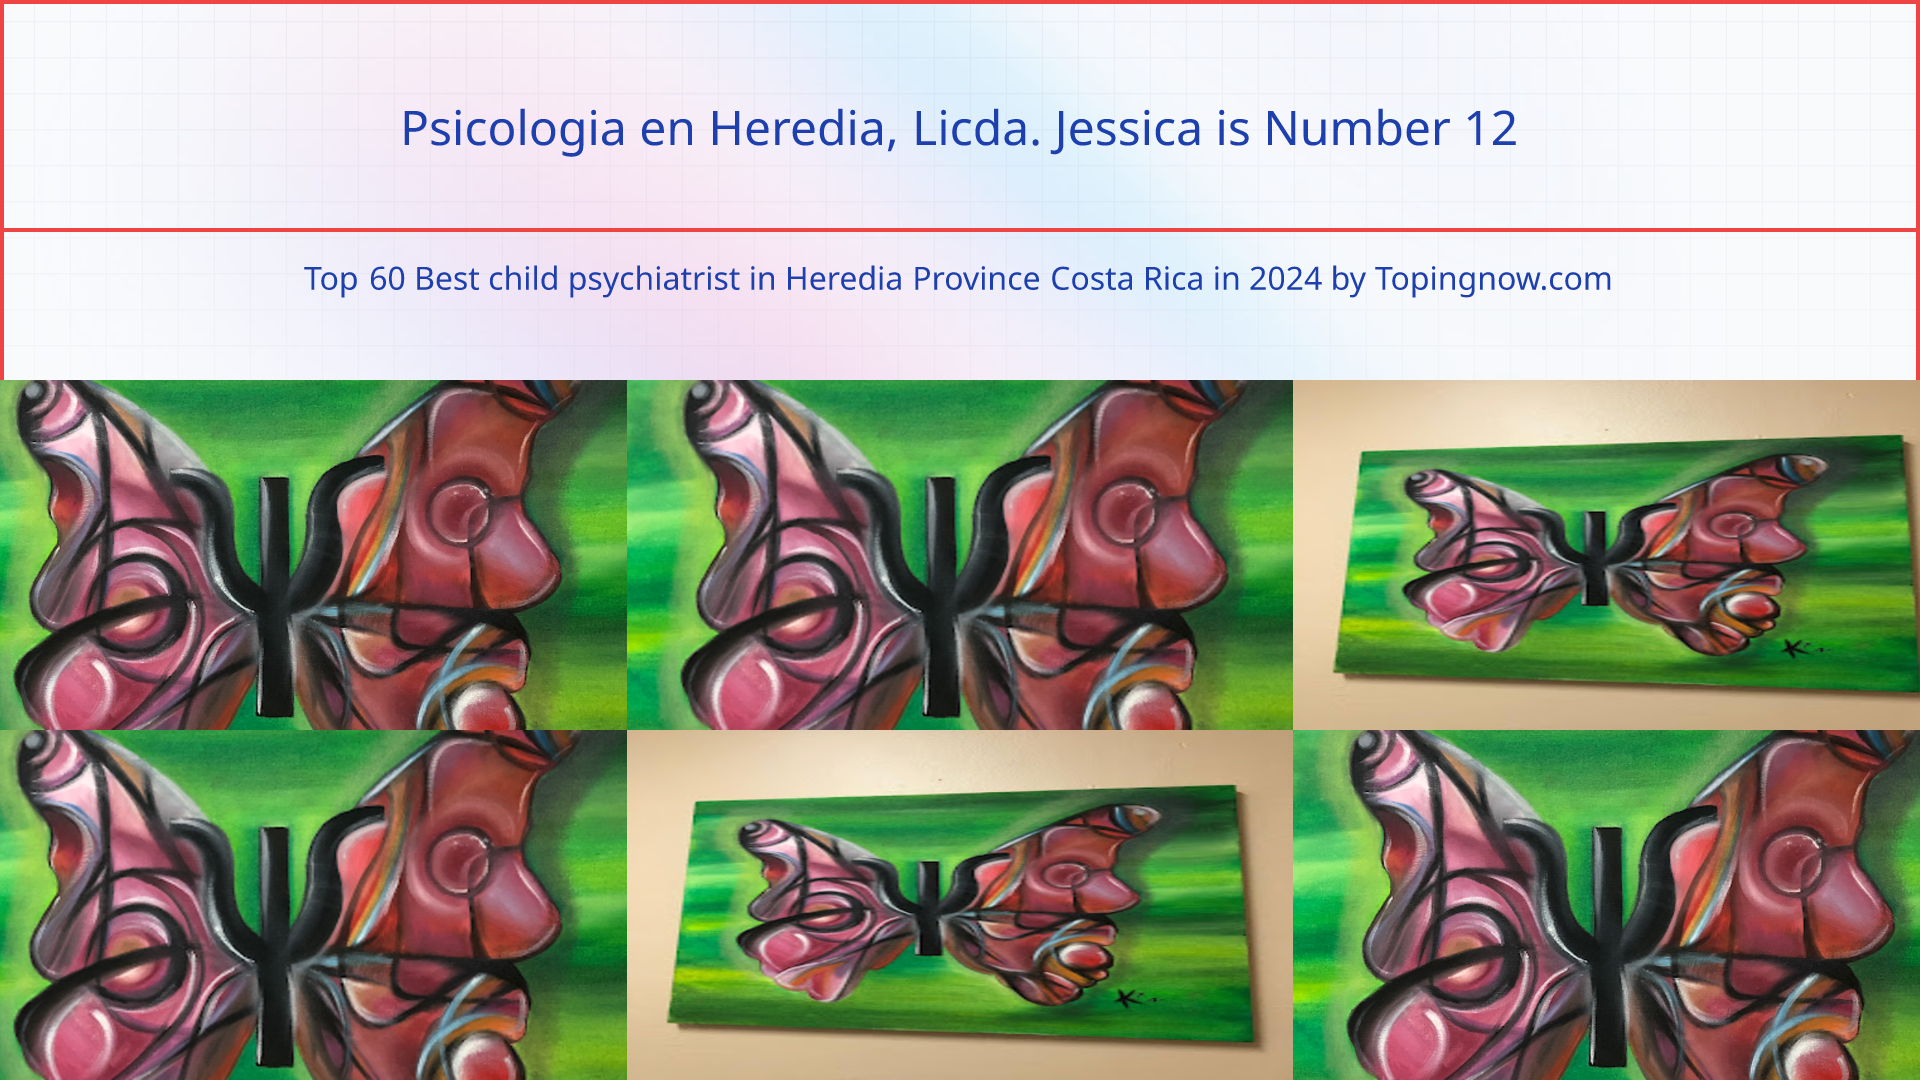 Psicologia en Heredia, Licda. Jessica: Top 60 Best child psychiatrist in Heredia Province Costa Rica in 2024